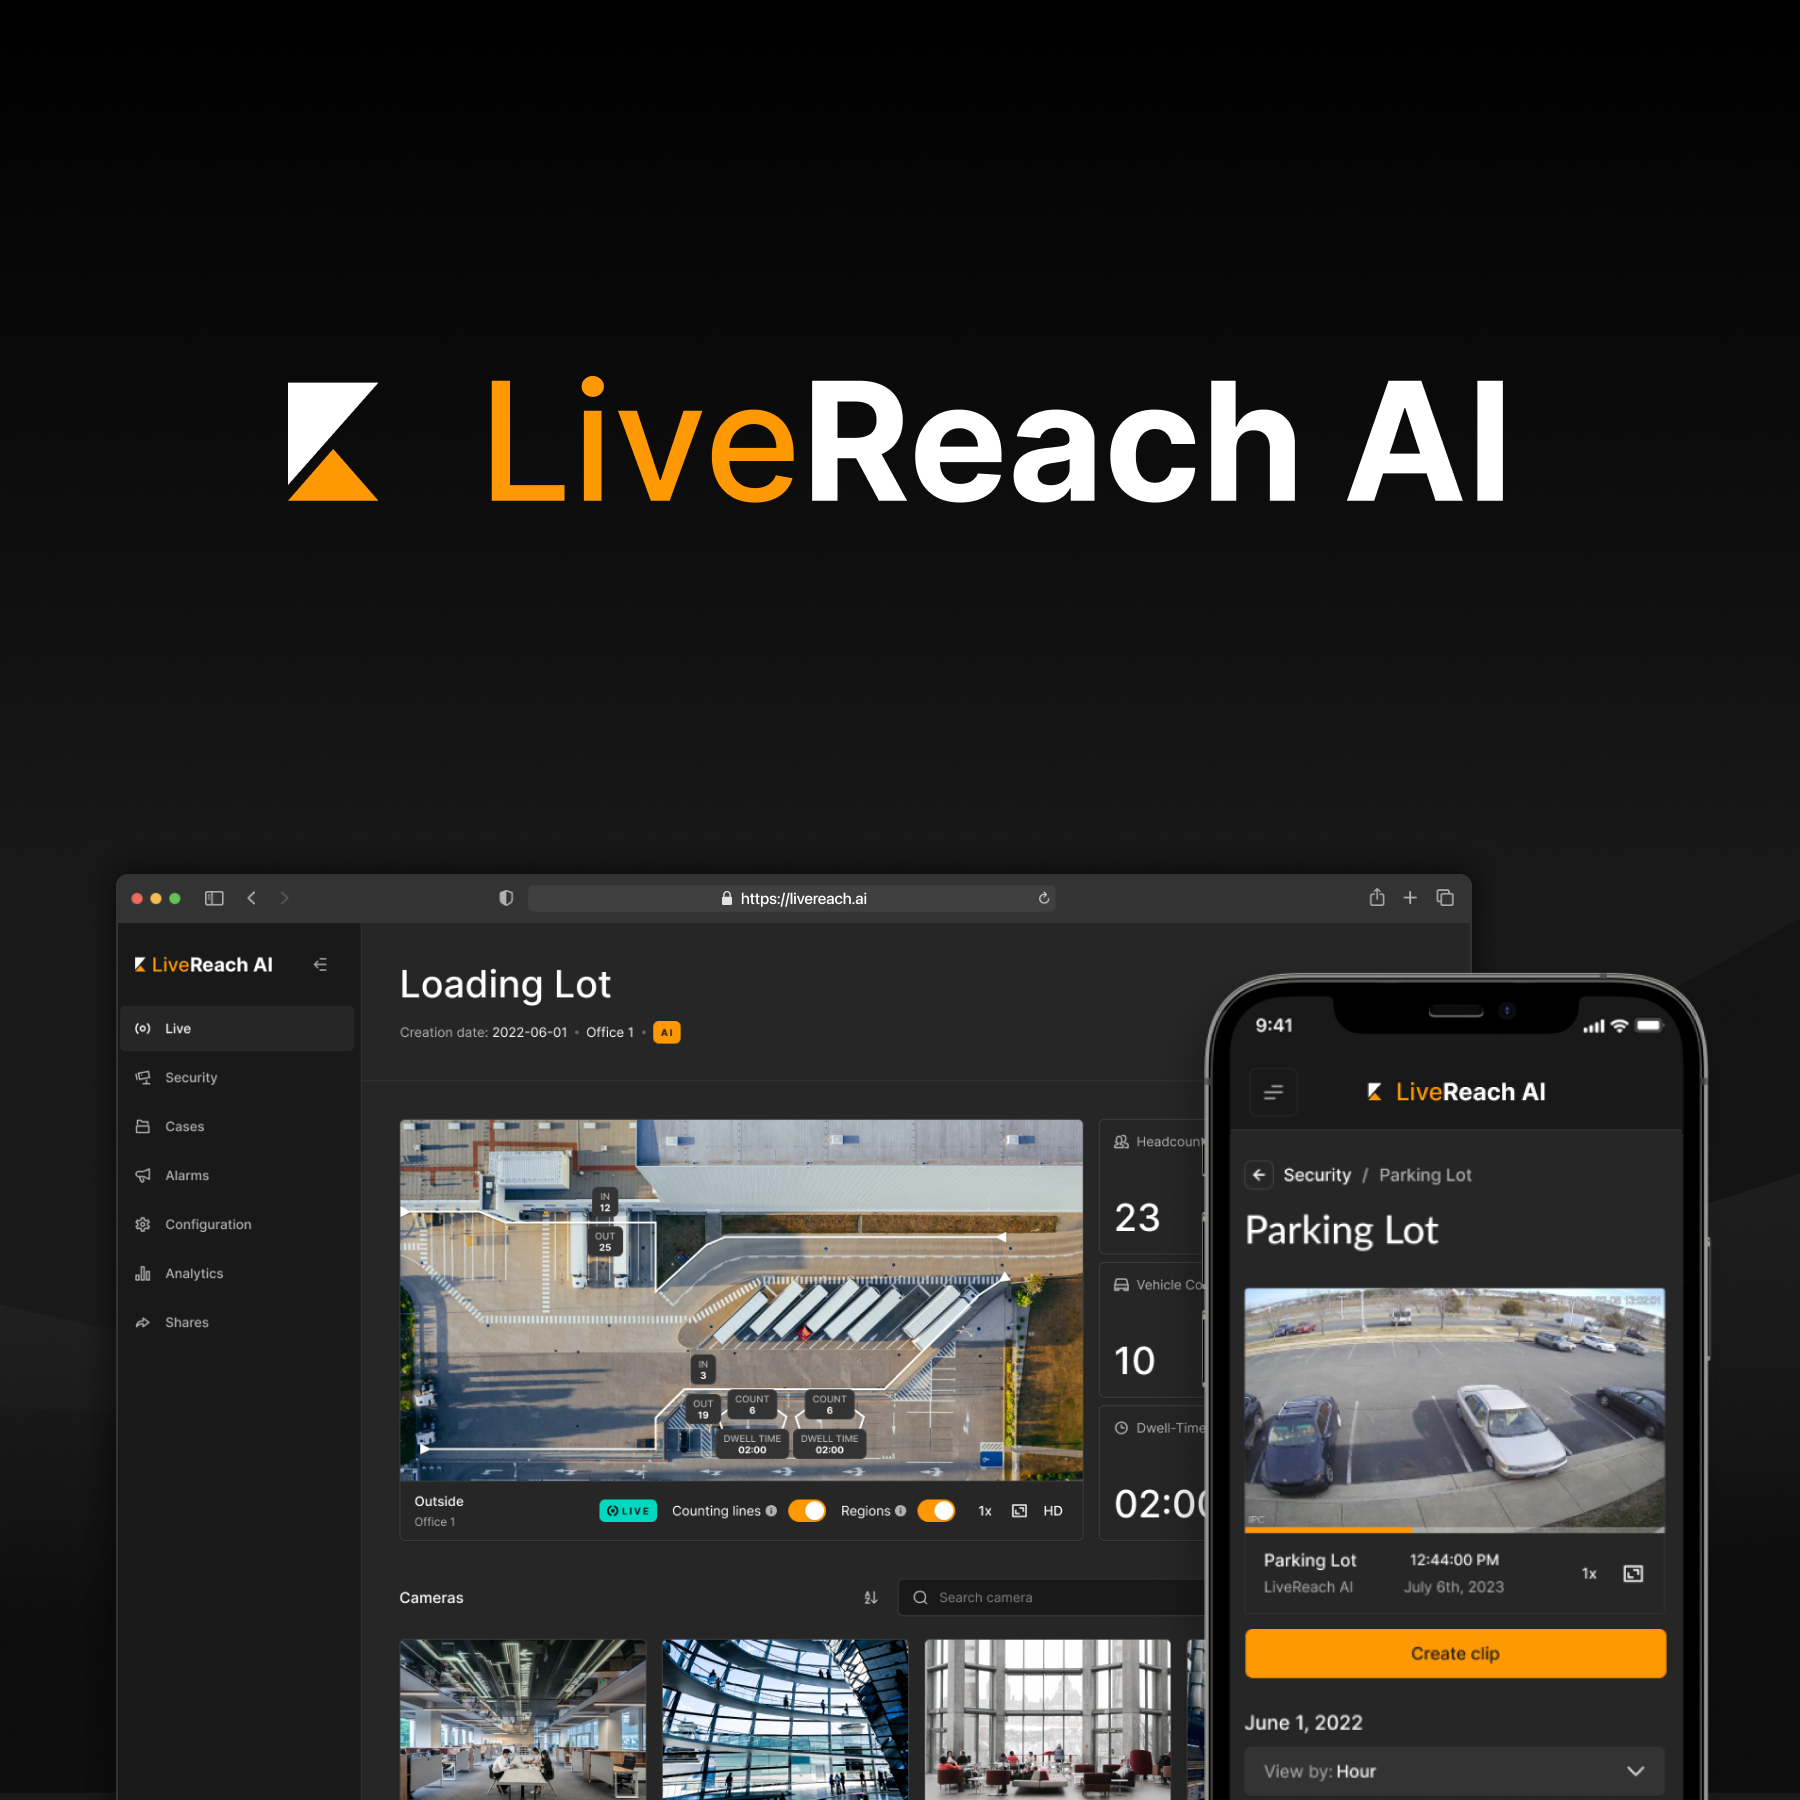 LiveReach AI